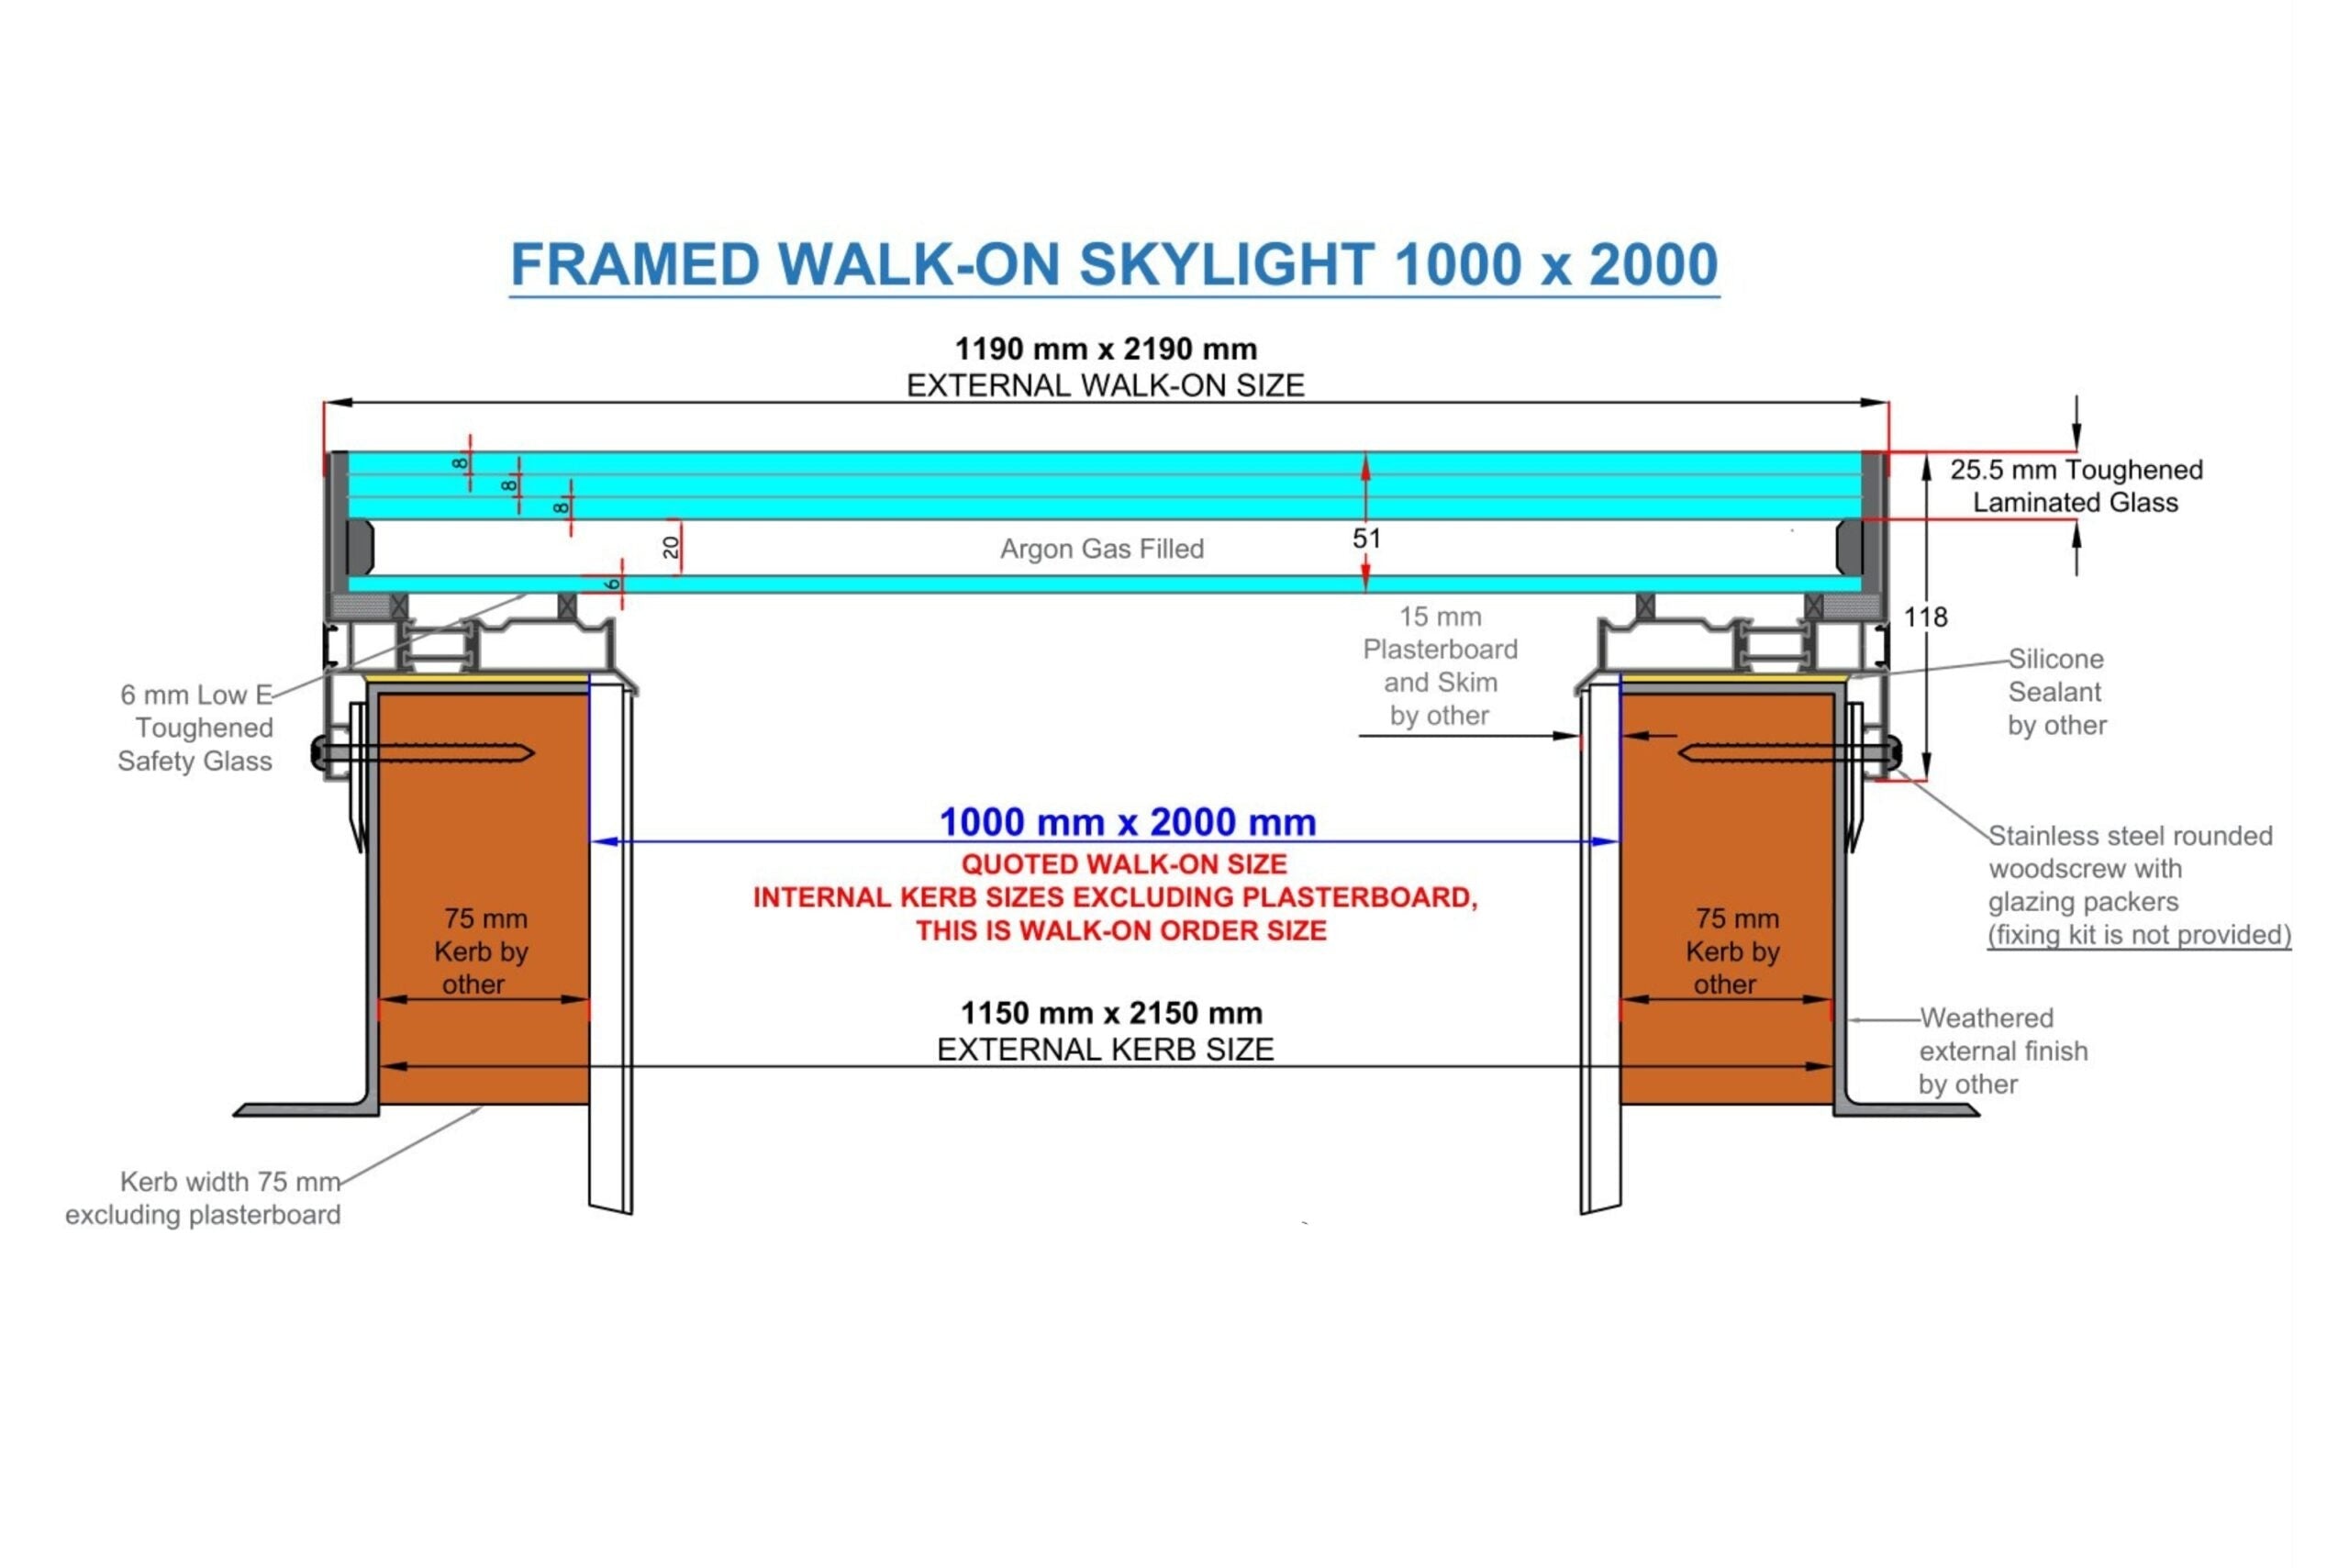 FRAMED WALK-ON DOUBLE GLAZED SKYLIGHT 1000 x 2000 mm